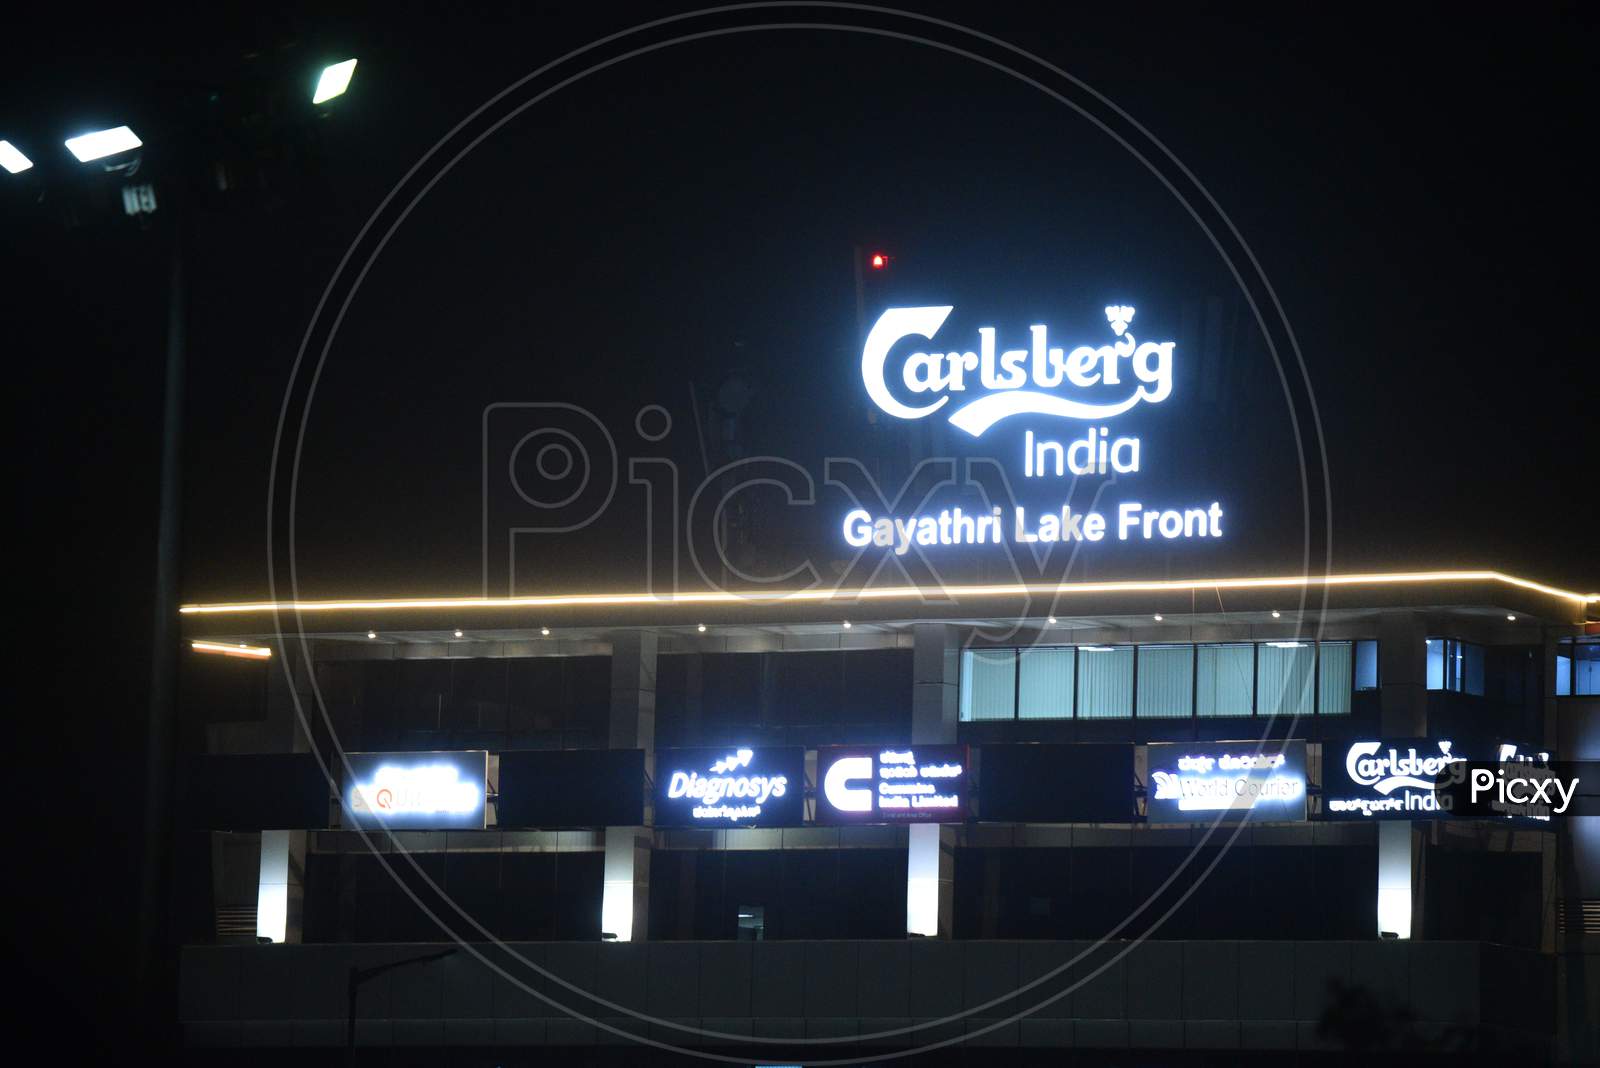 Gayatri Lake Front, Carlsberg India.